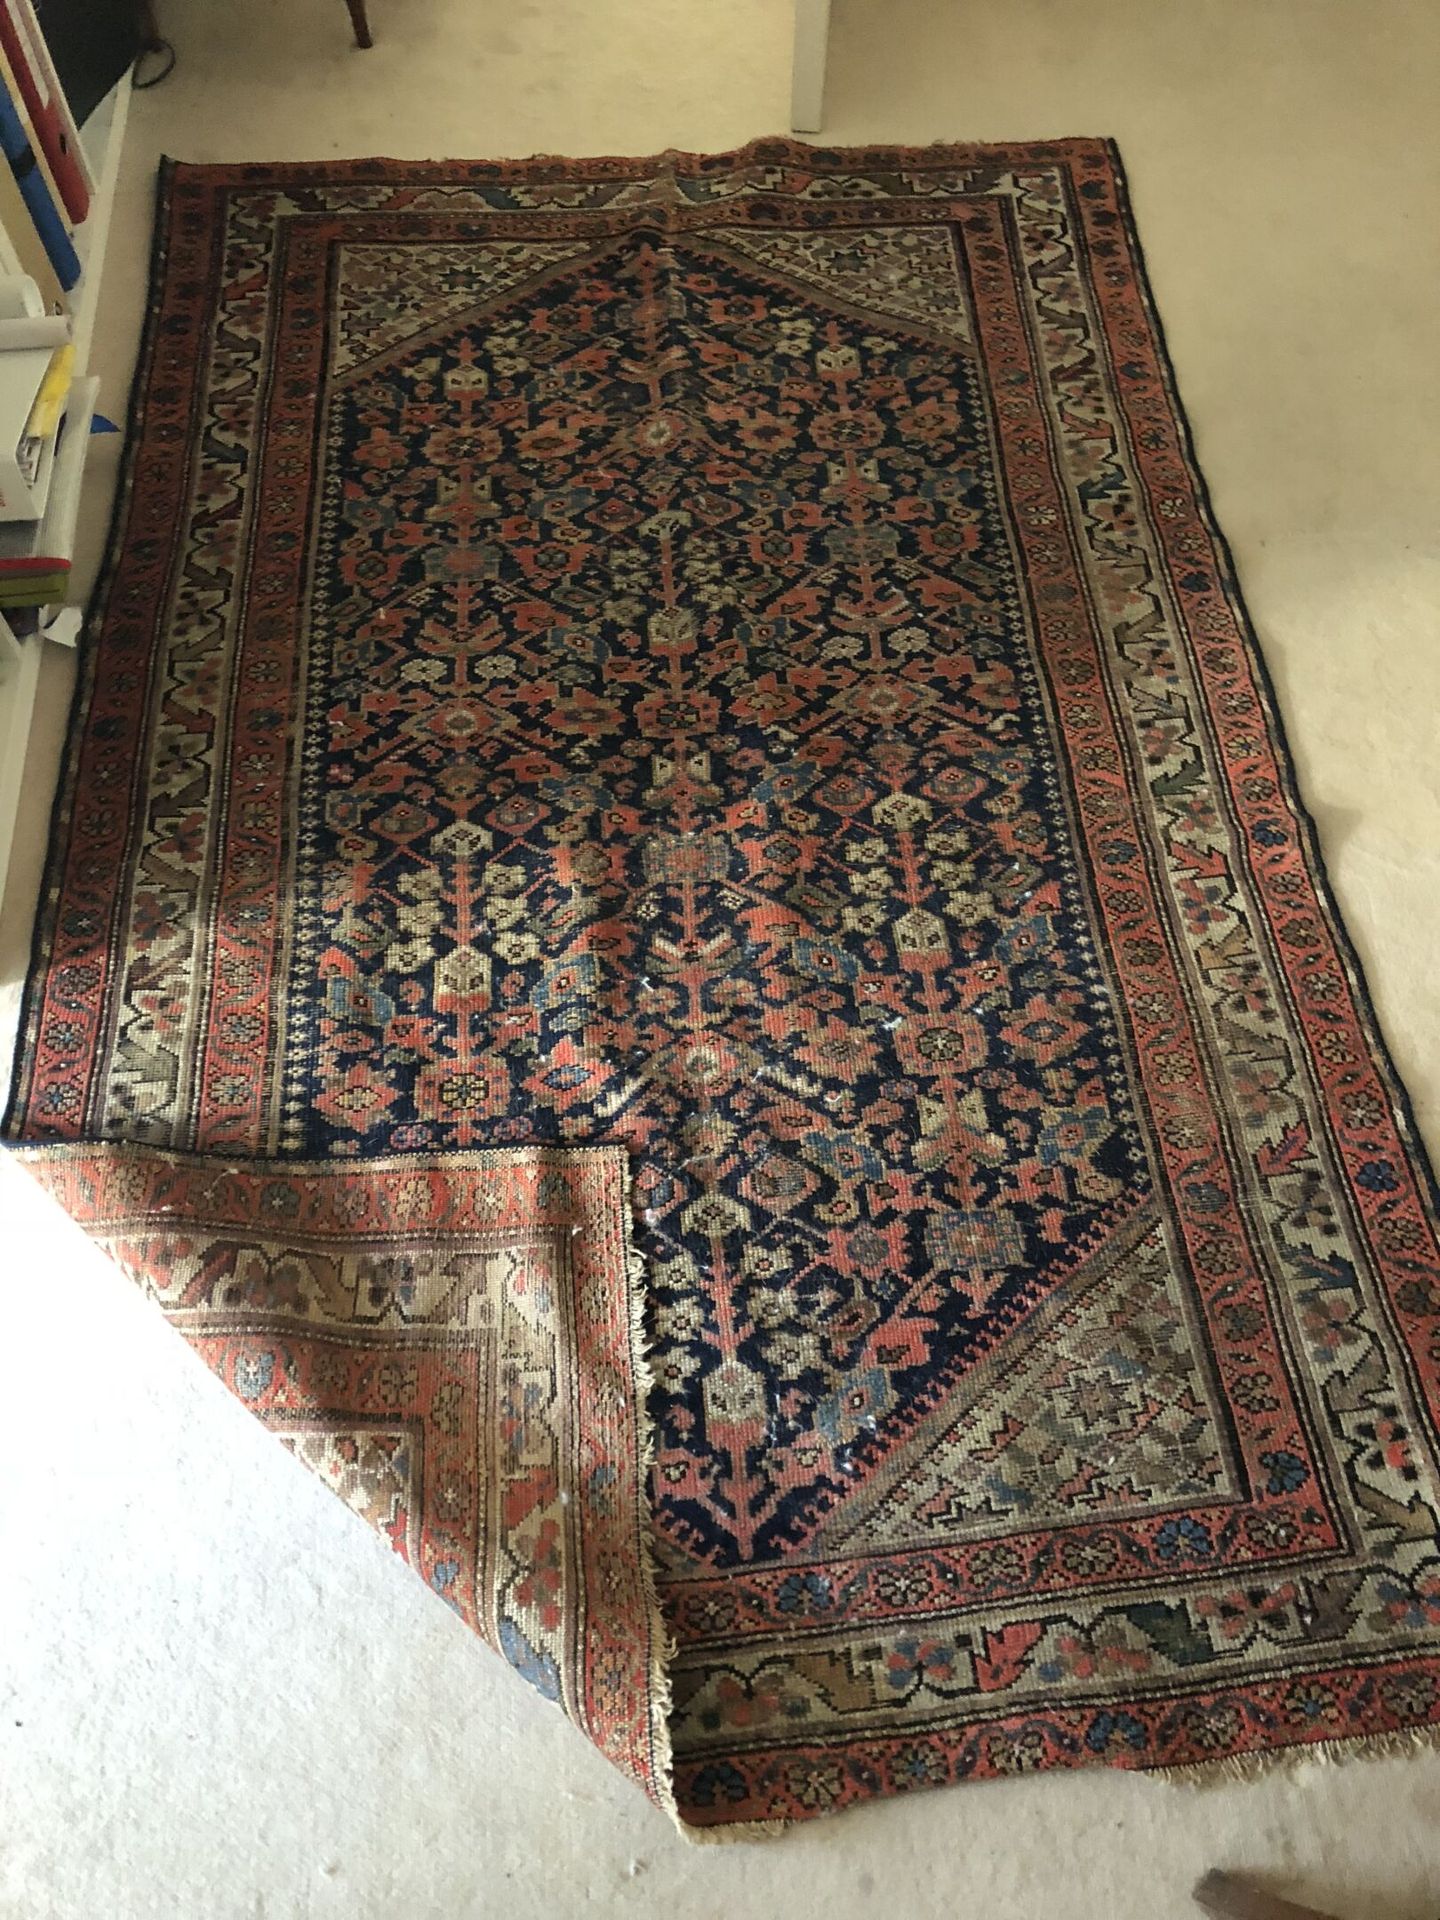 CAUCASE, XXème siècle 
Wool carpet with floral decoration in a large rhombus wit&hellip;